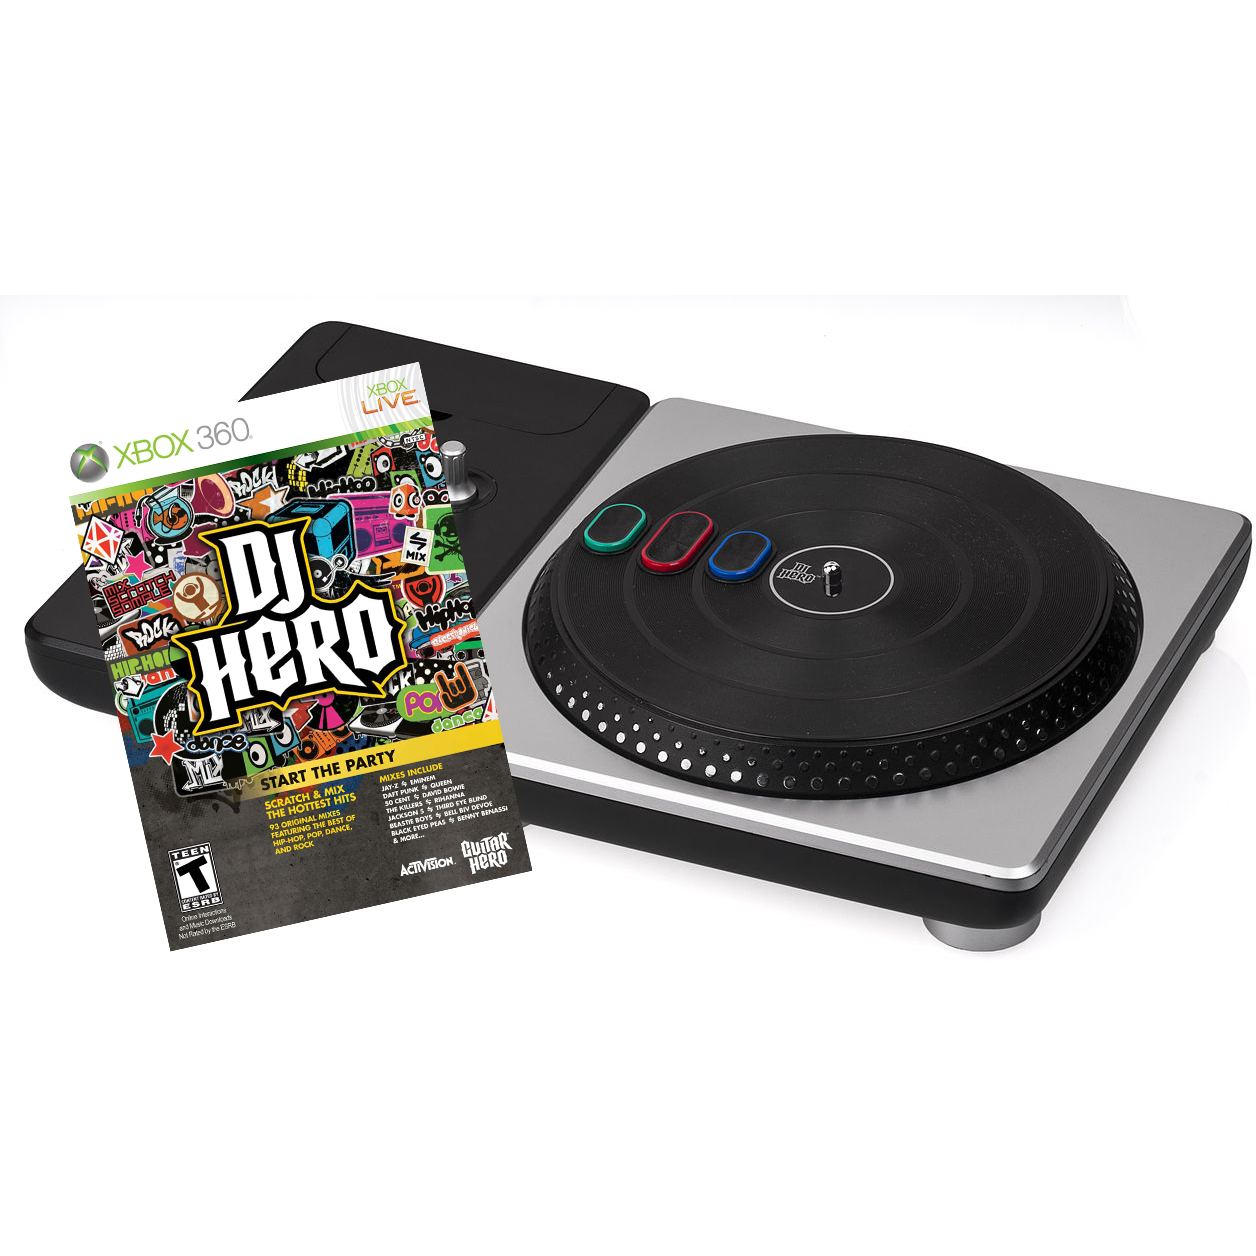 XBOX 360 - DJ Hero with Turntable